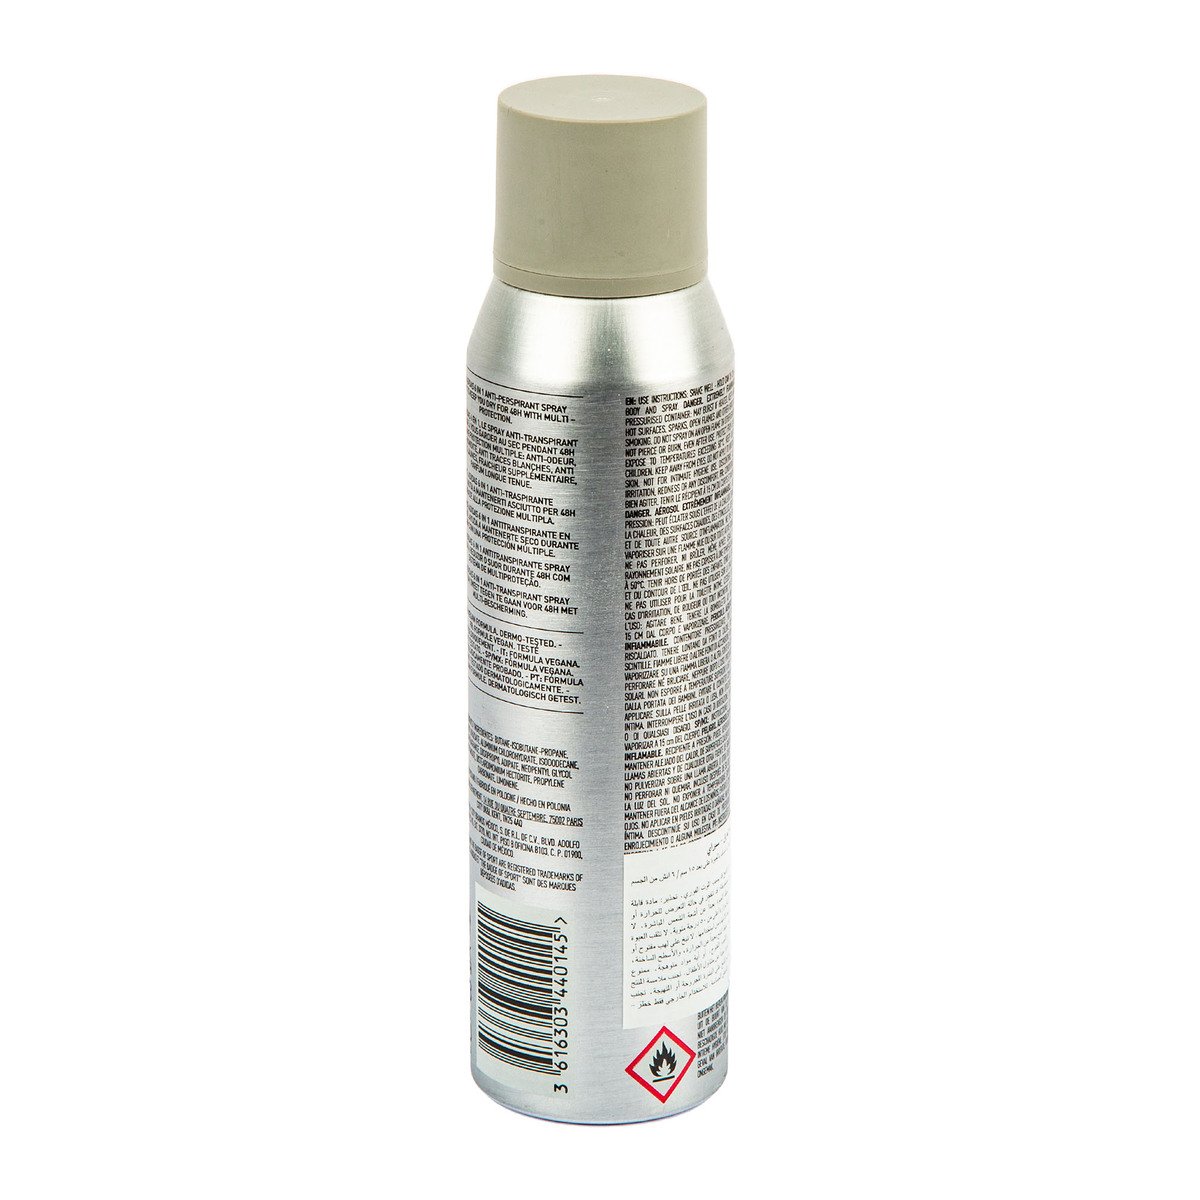 Adidas 6in1 Anti-Perspirant Spray For Men 150 ml